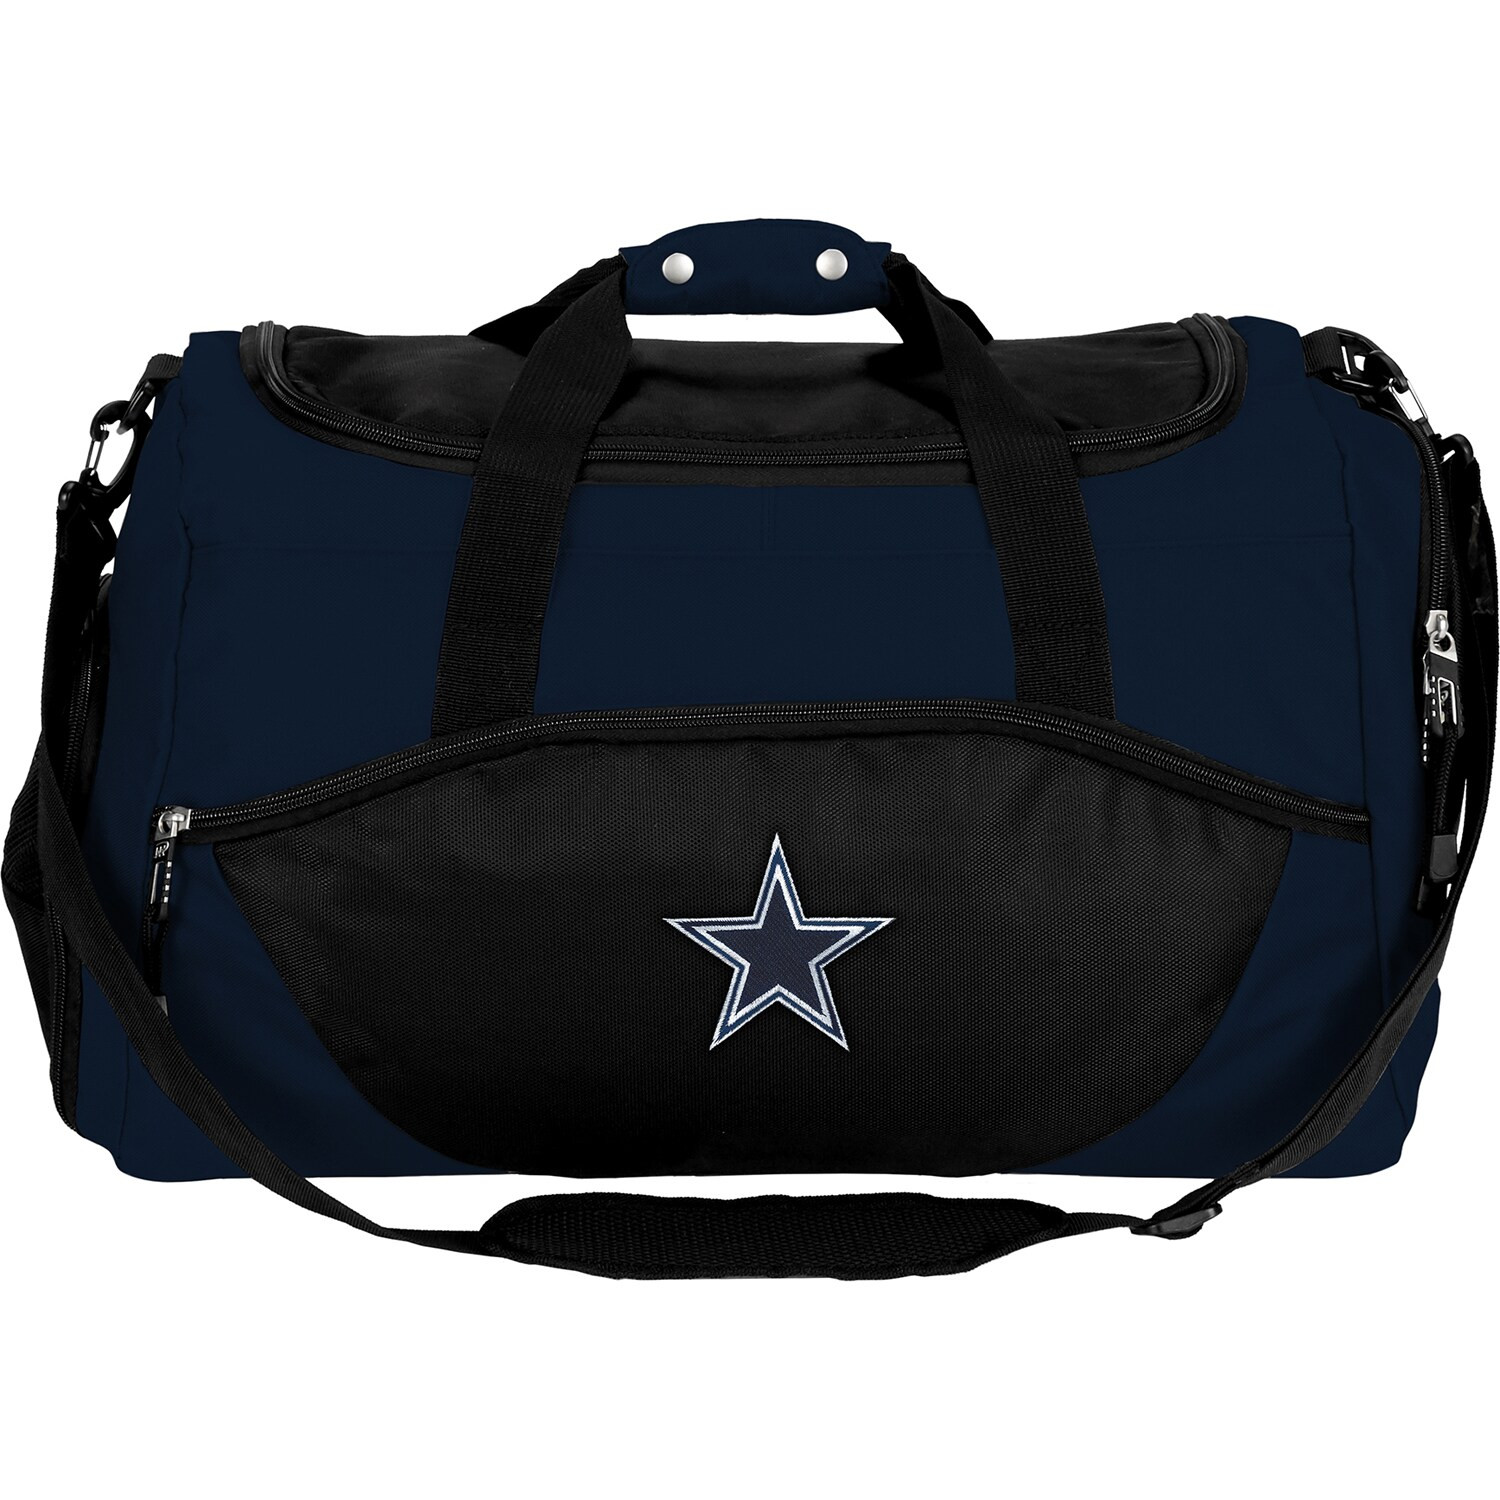 Dallas Cowboys Fan Gift Ideas
 15 Cool Gift Ideas for Dallas Cowboys Fans in 2021